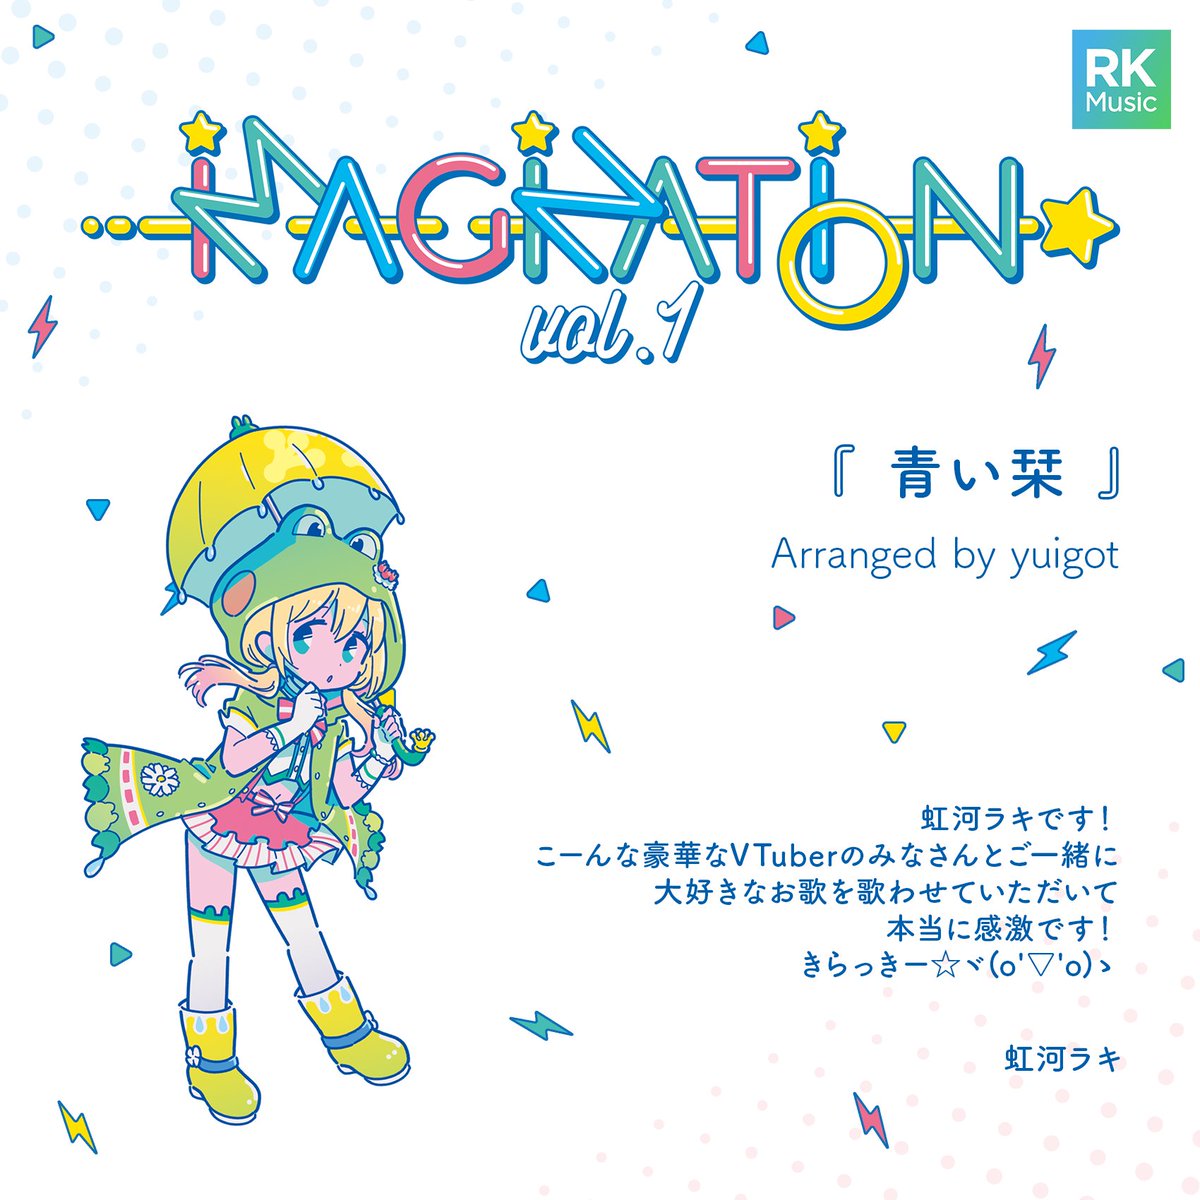 Rk Music On Twitter コンピレーションアルバム Imagination